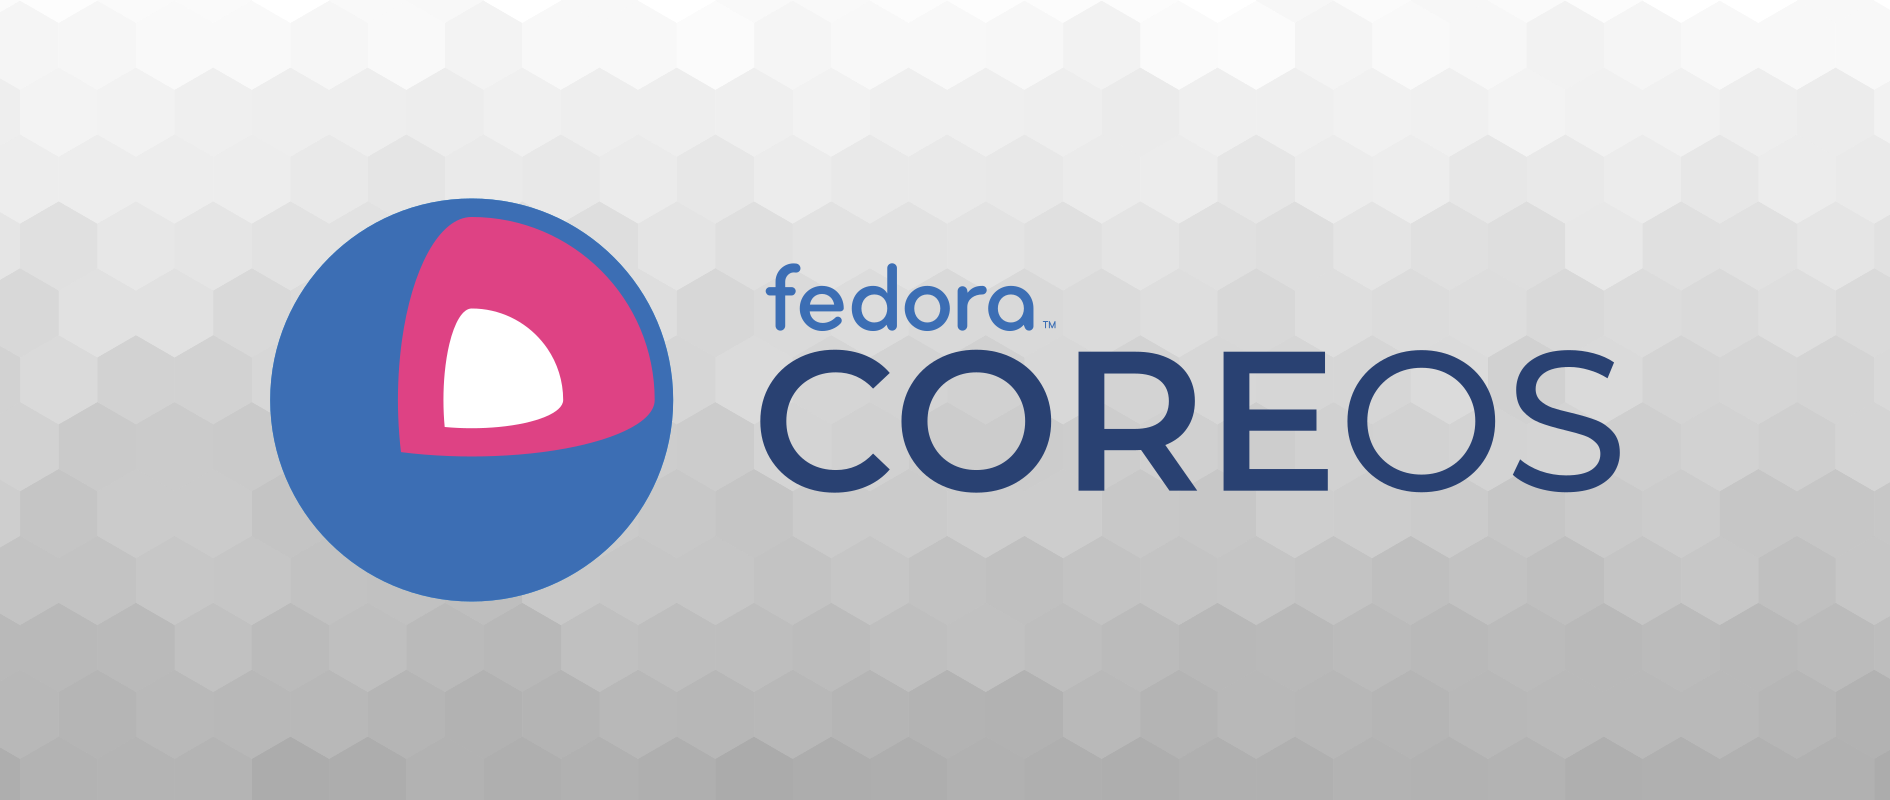 Coreos. Fedora Coreos. Core os. Fedora Coreos logo. Coreos Container.